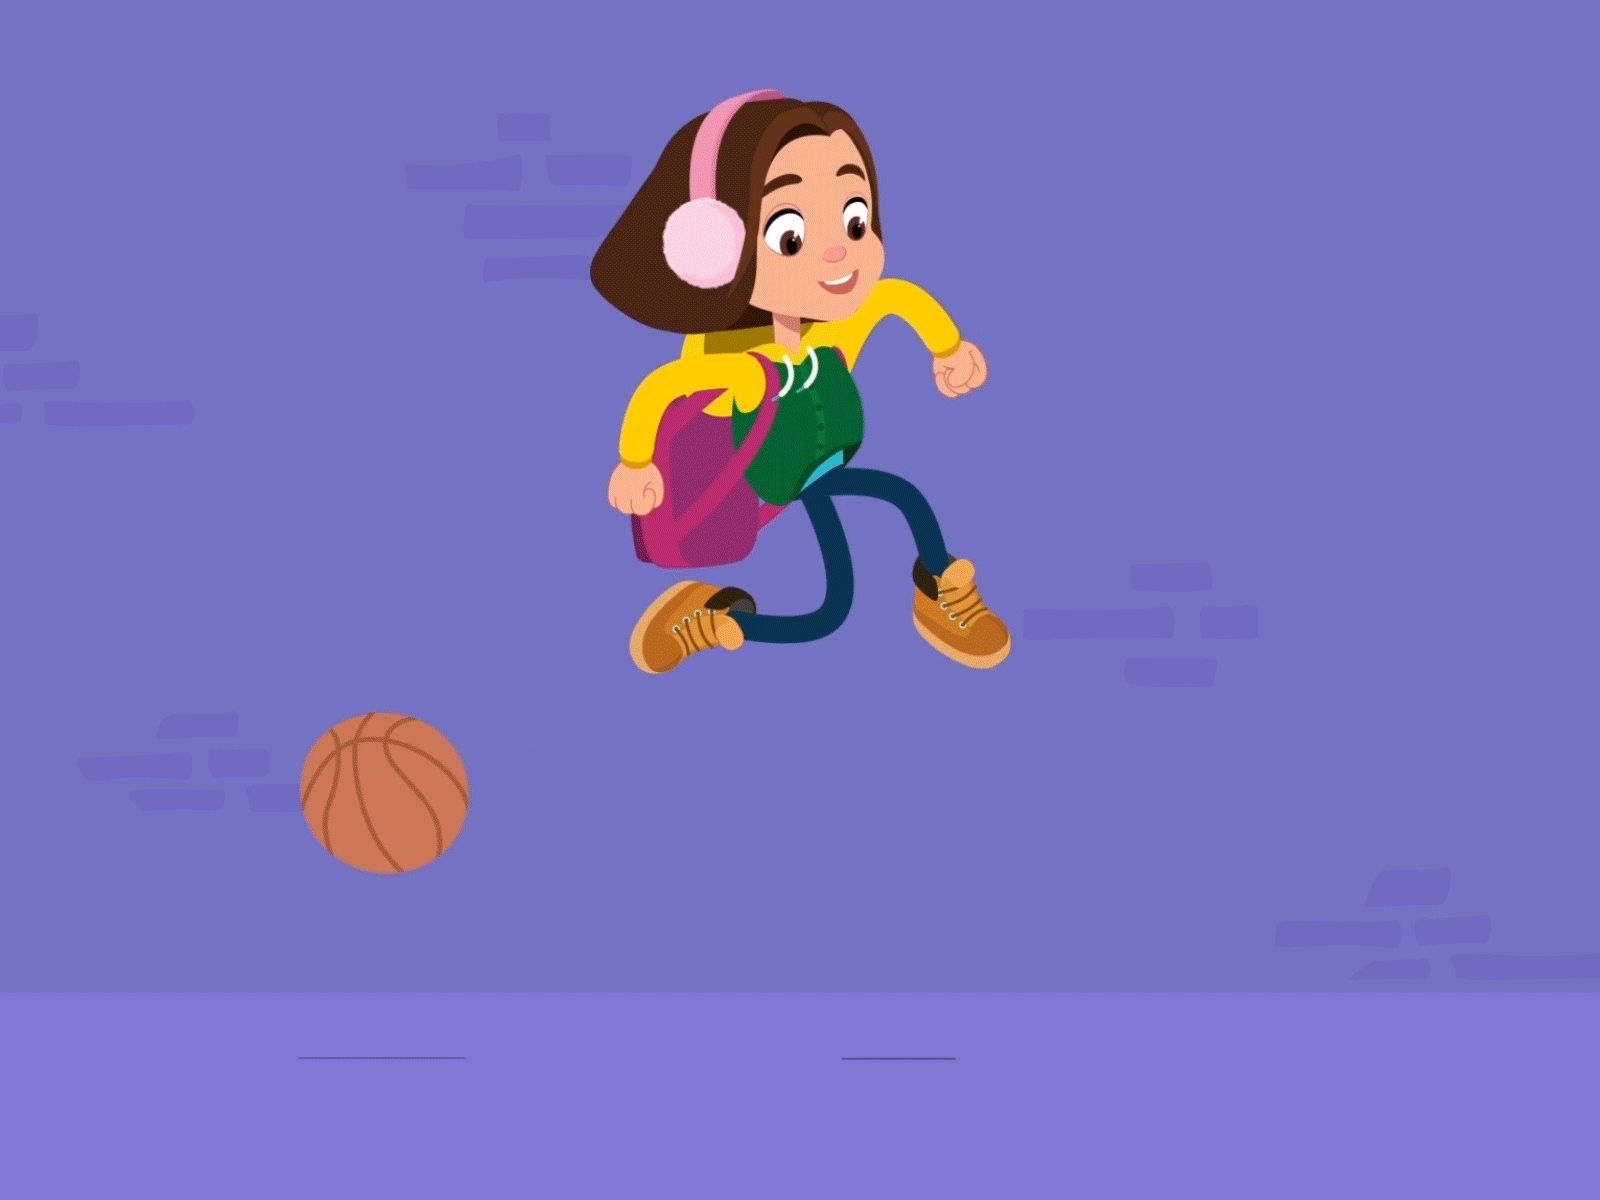 Girl Character Jump Animation by Elmira Amirova on Dribbble